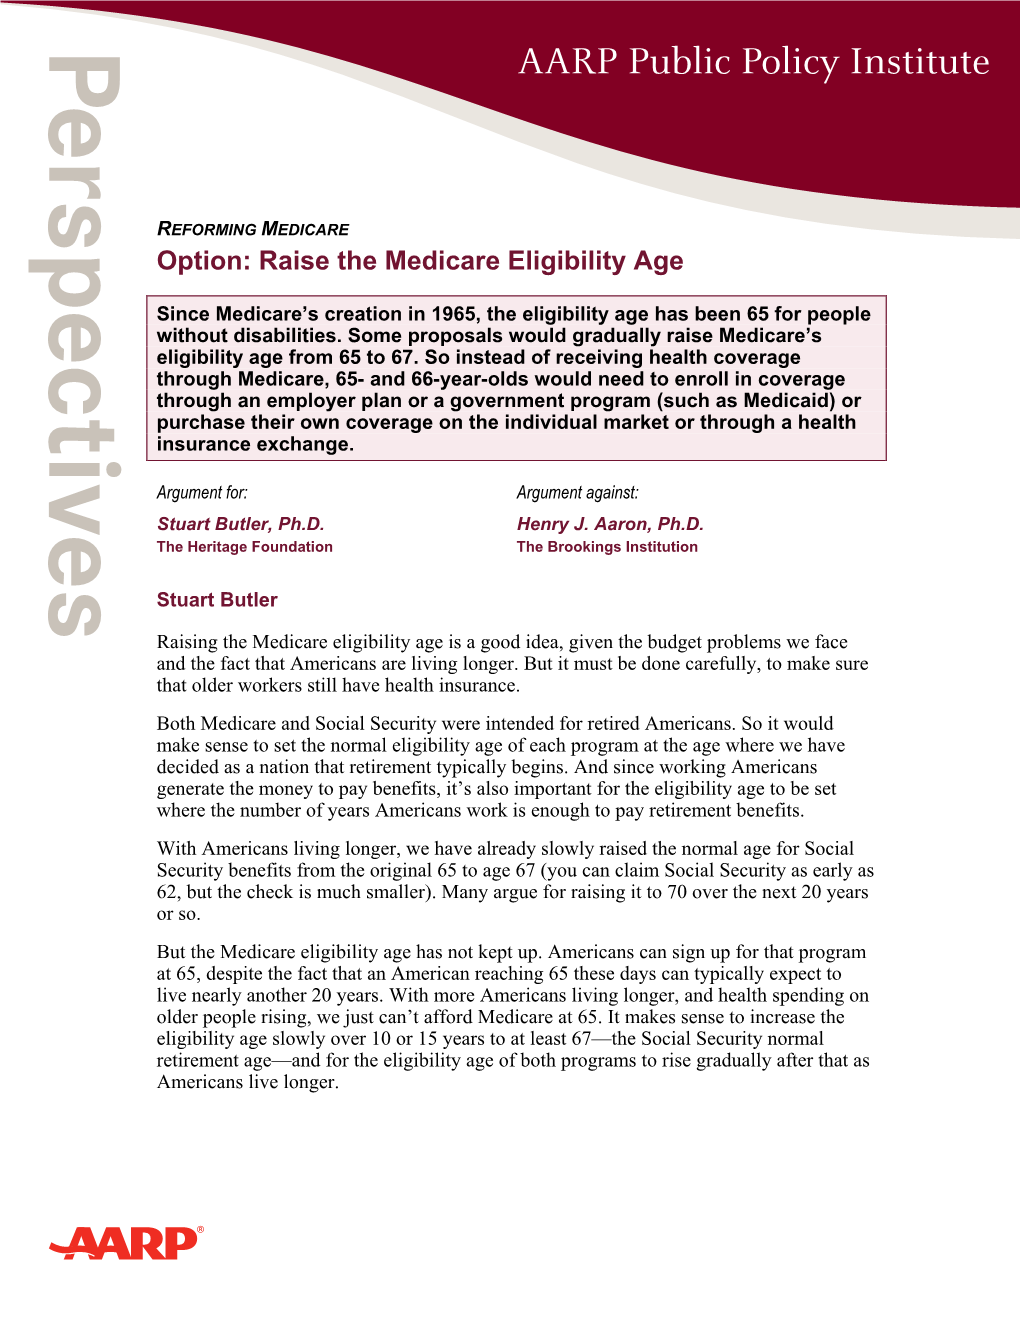 Raise the Medicare Eligibility Age